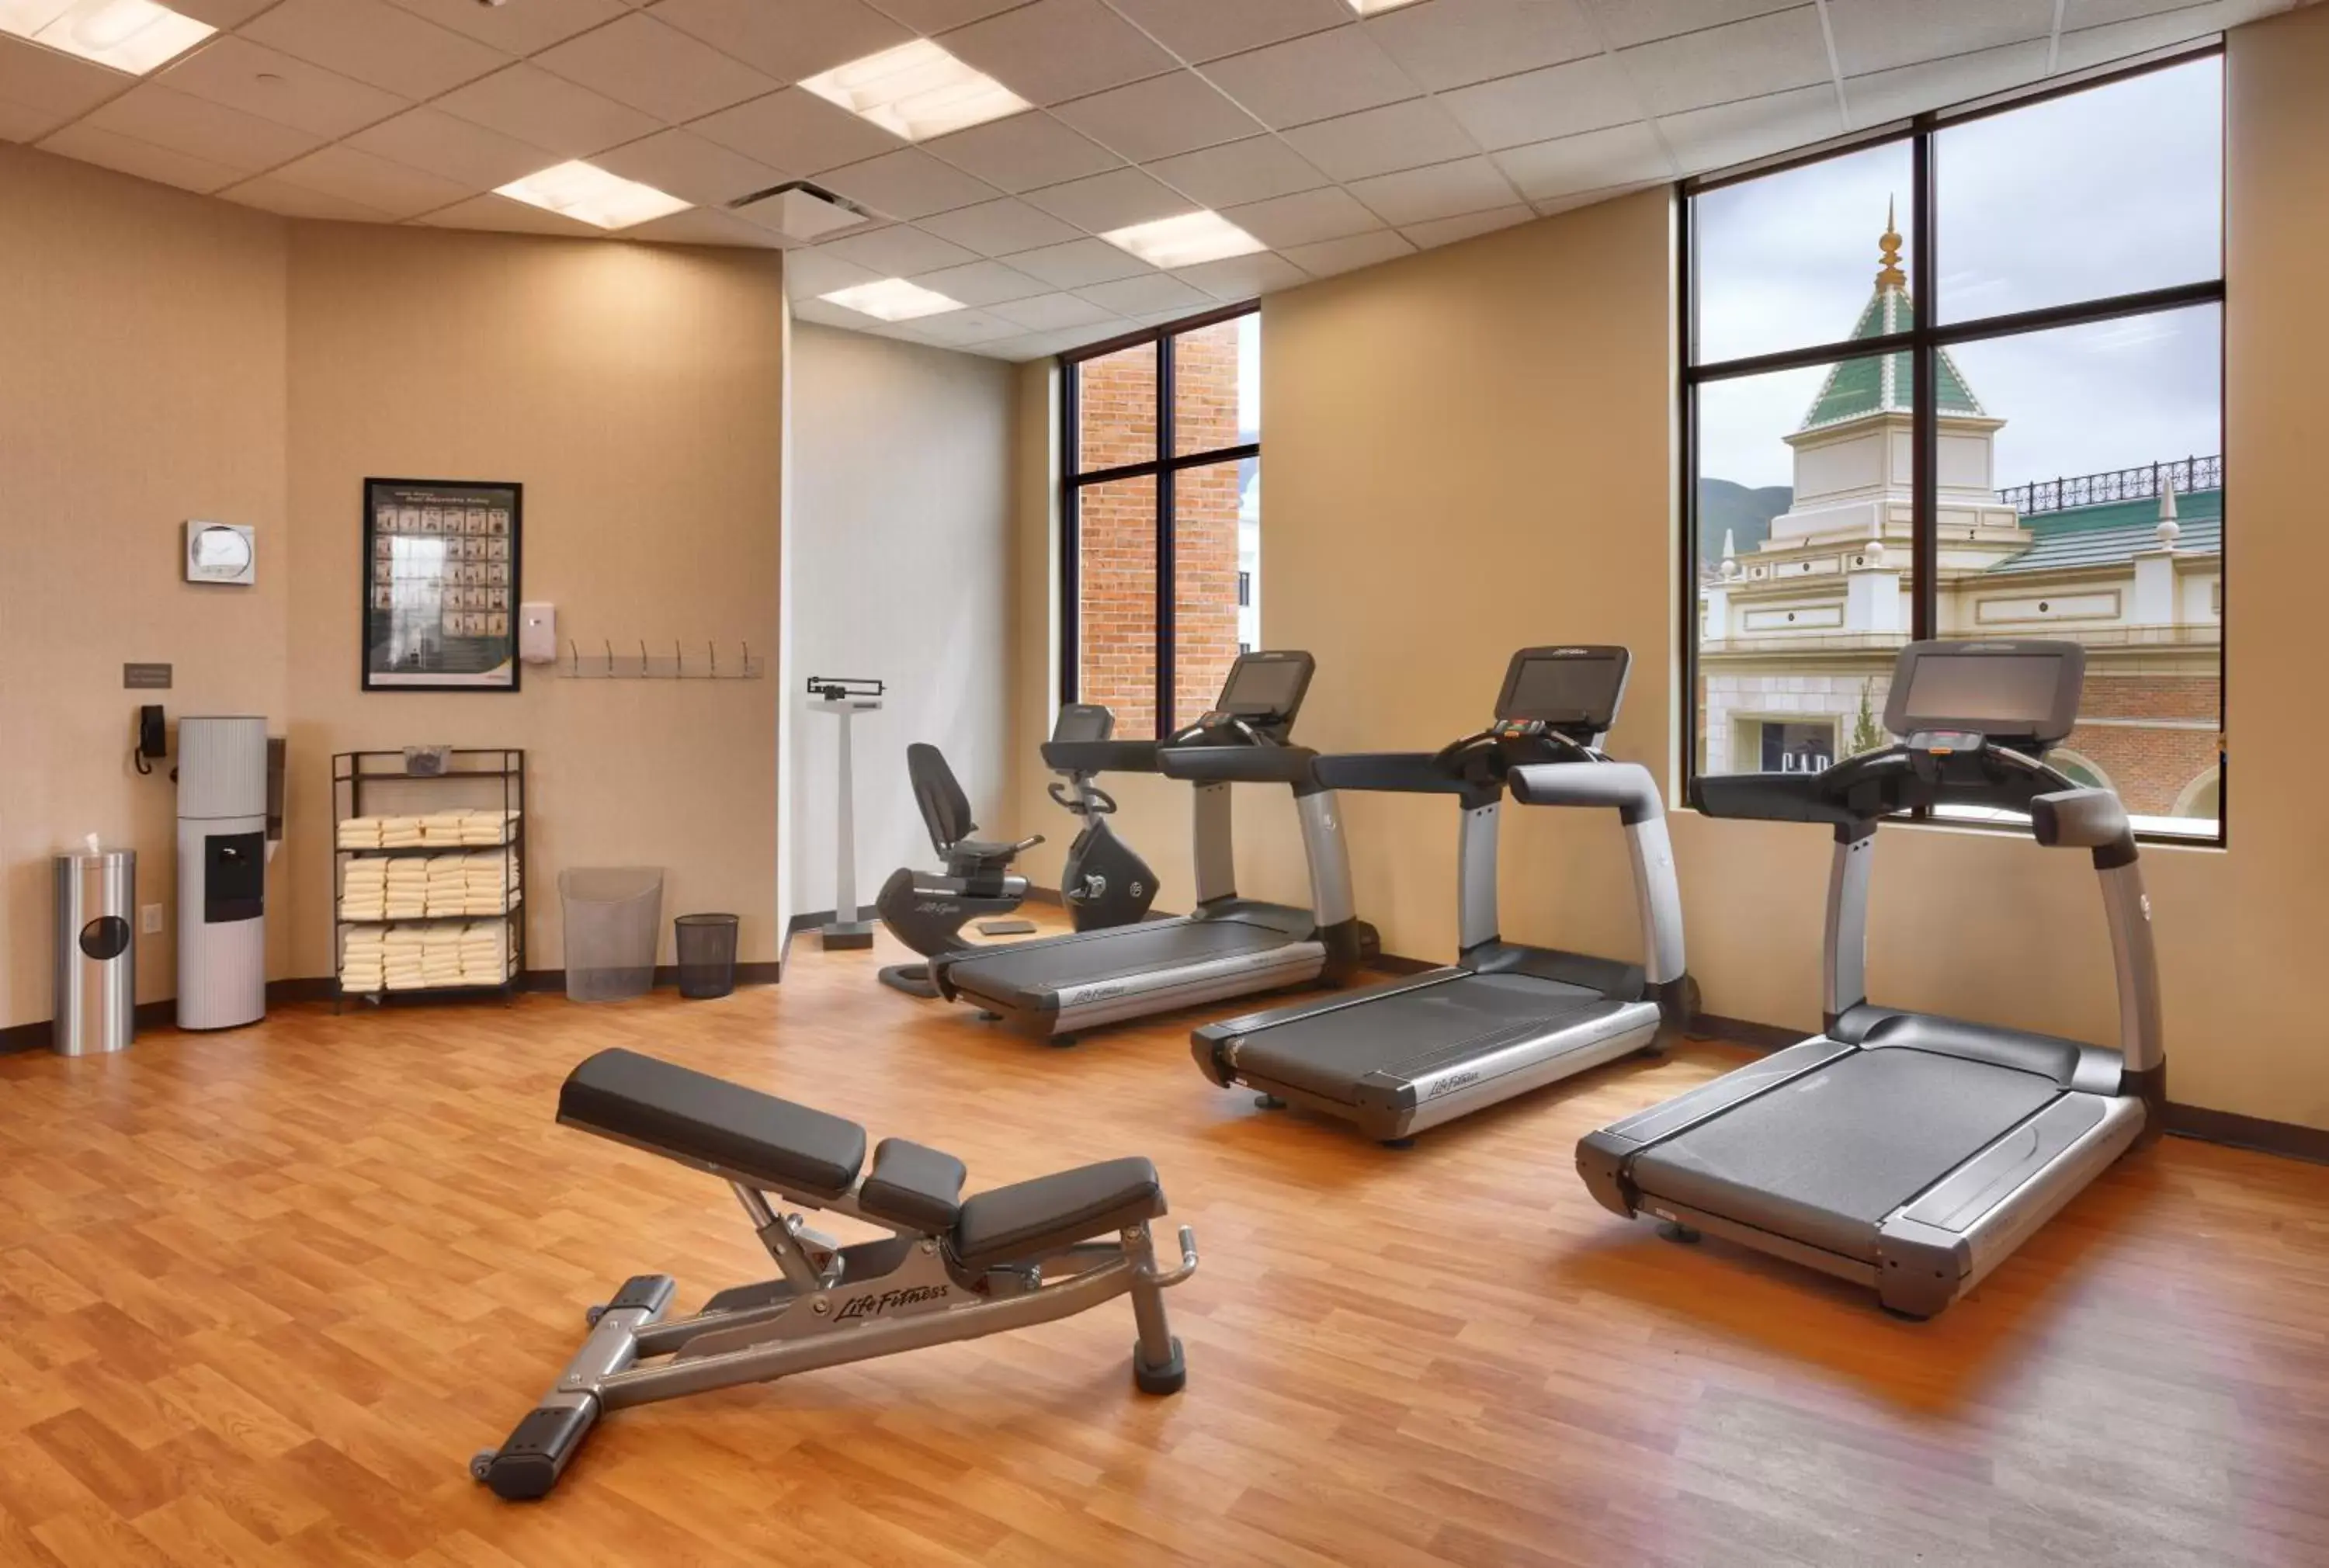 Fitness centre/facilities, Fitness Center/Facilities in Hyatt Place Salt Lake City Farmington Station Park